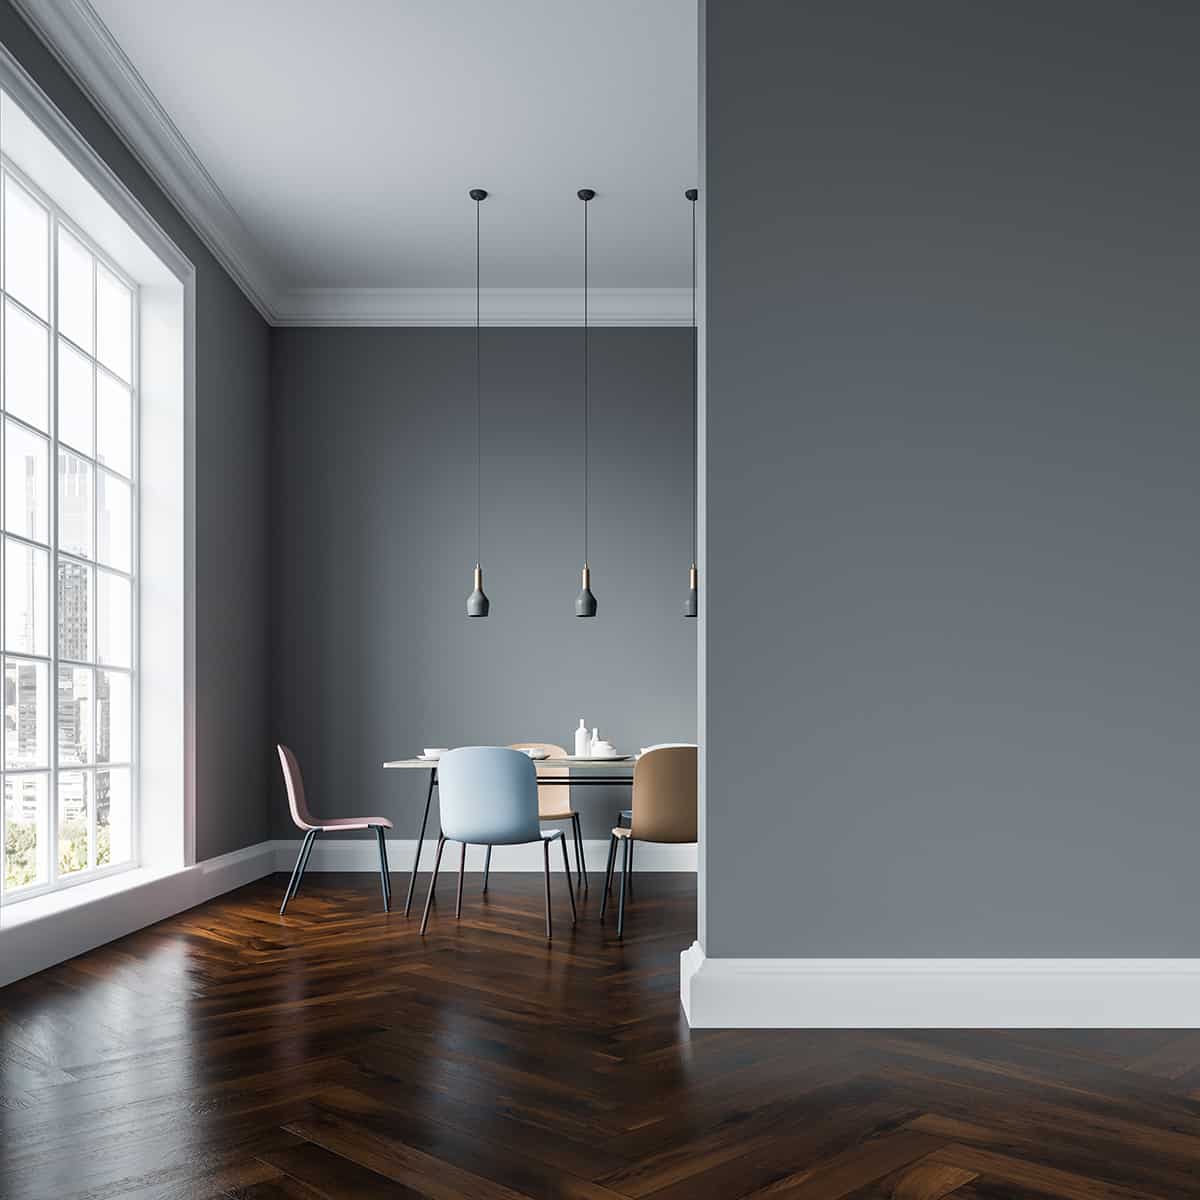 Wood Floor Goes With Gray Walls, Light Hardwood Floors With Gray Walls